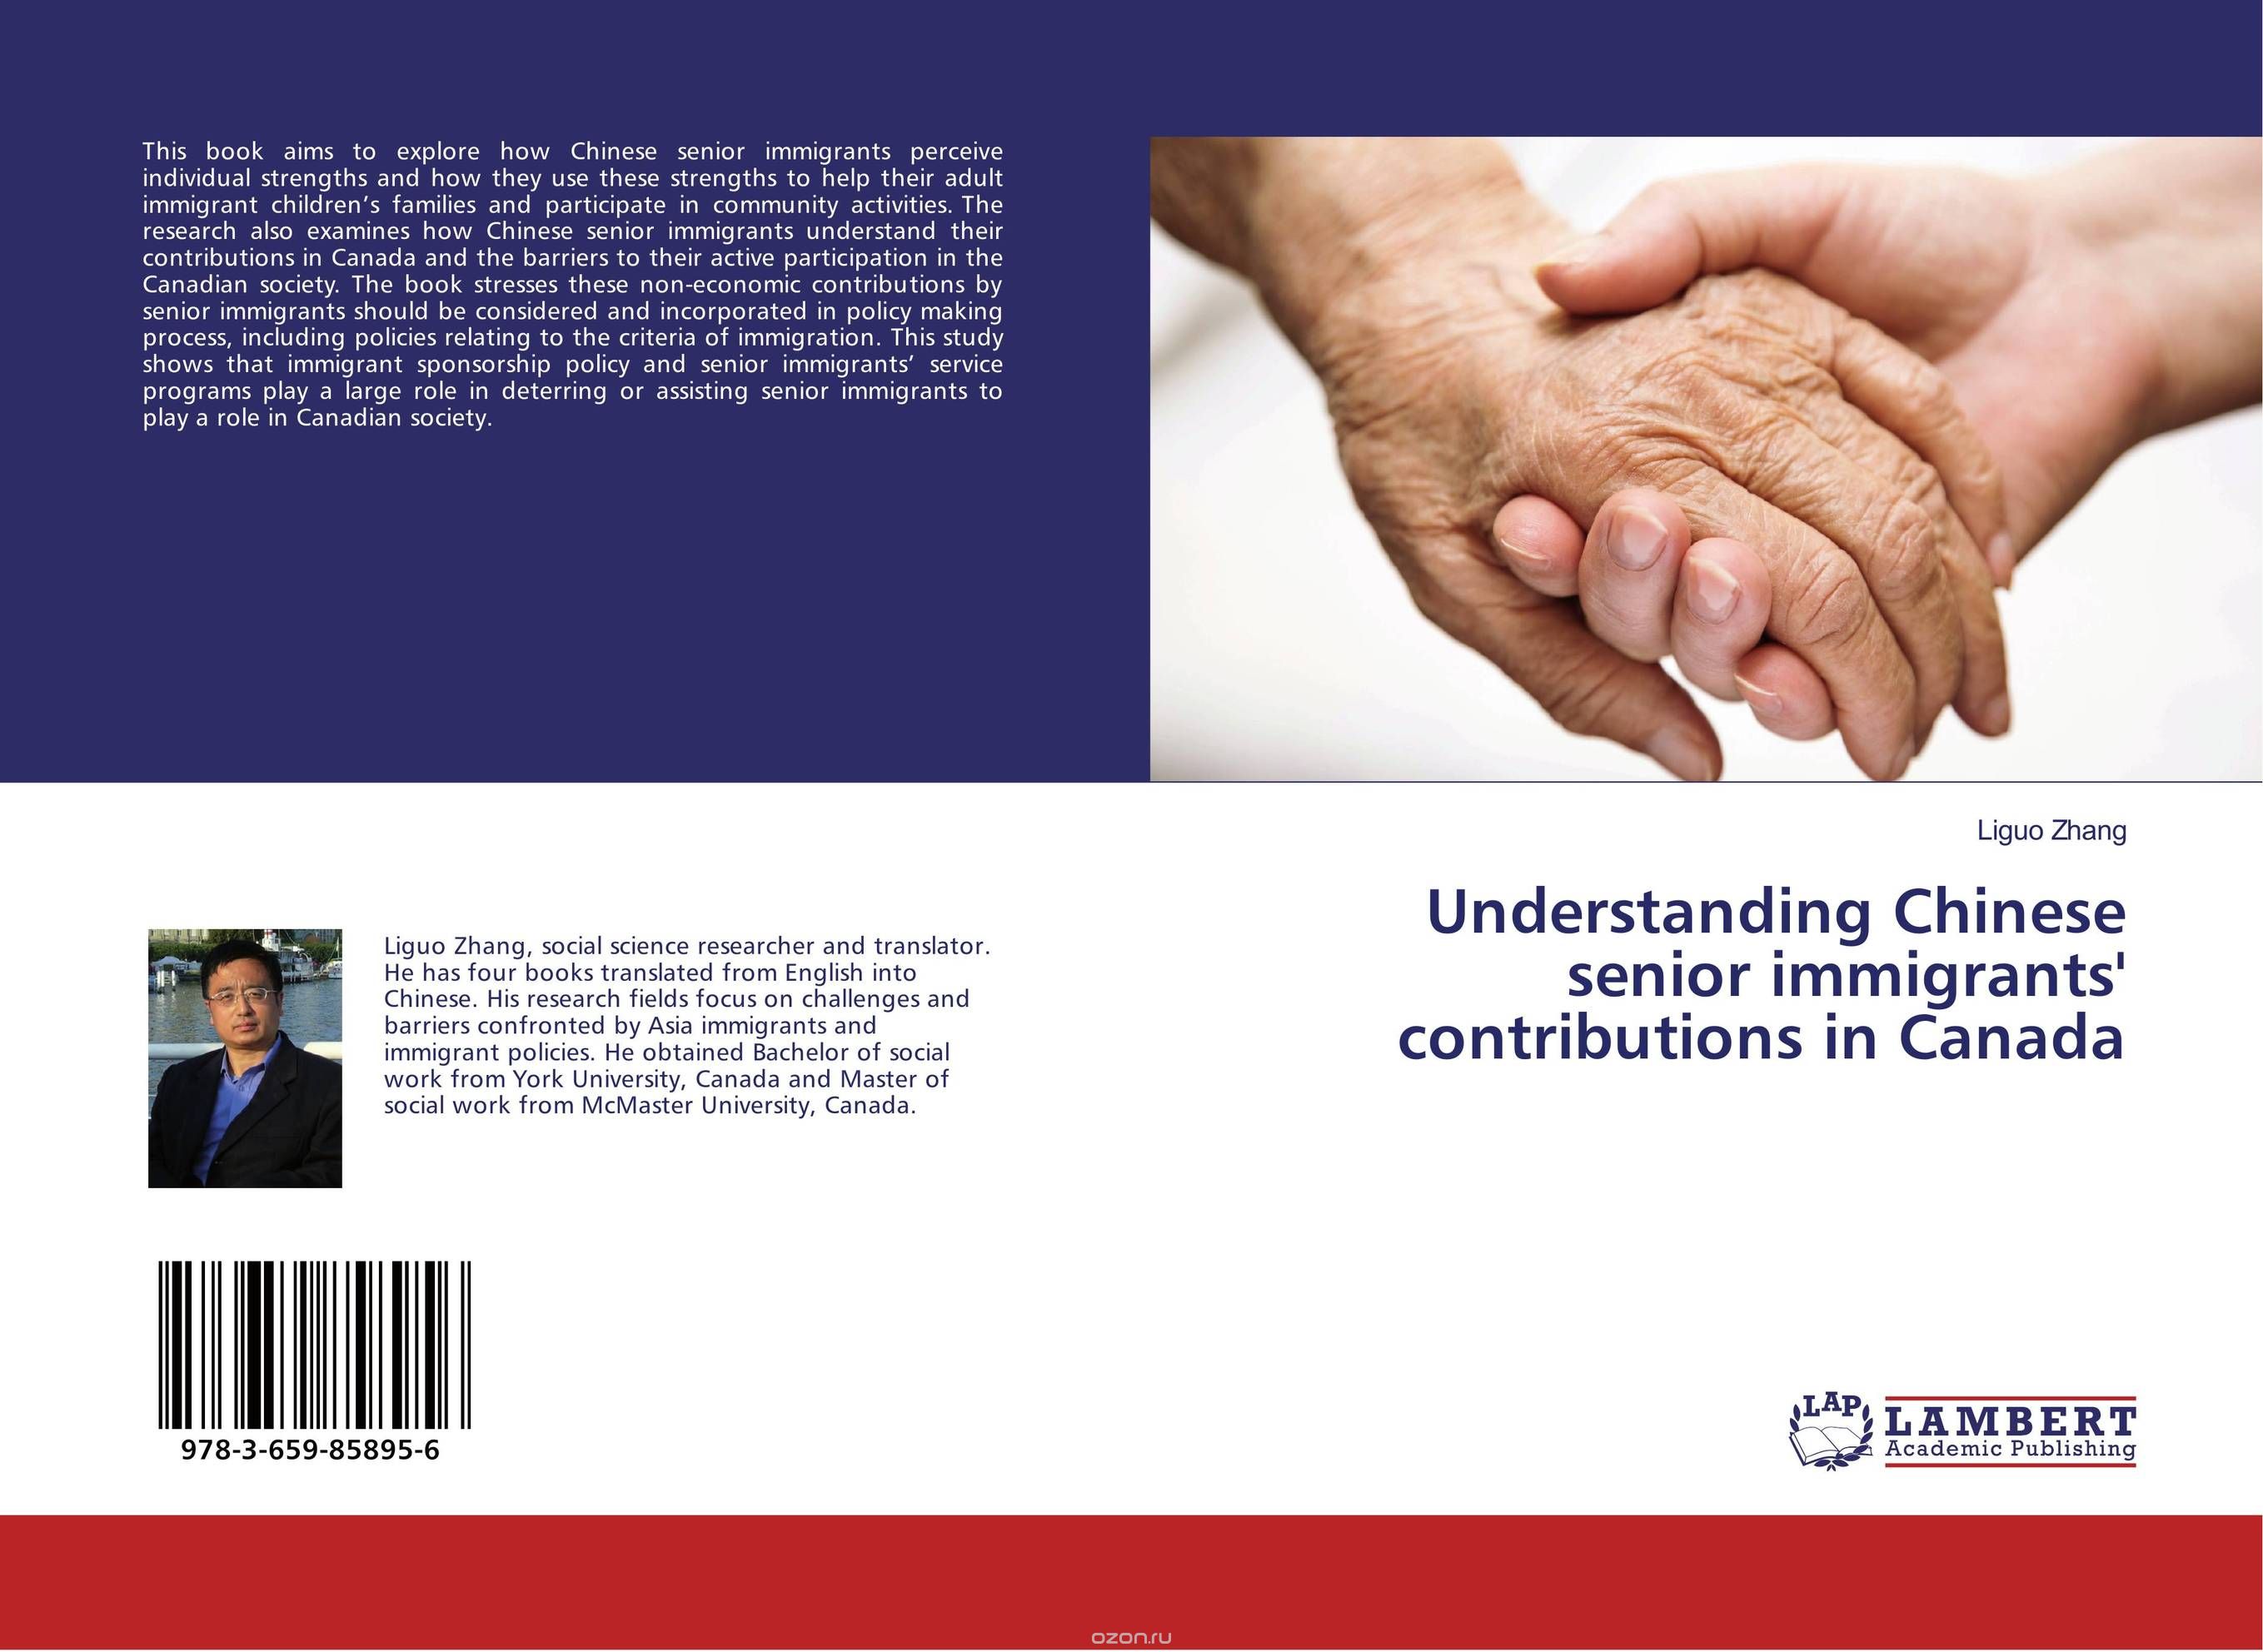 Скачать книгу "Understanding Chinese senior immigrants' contributions in Canada"